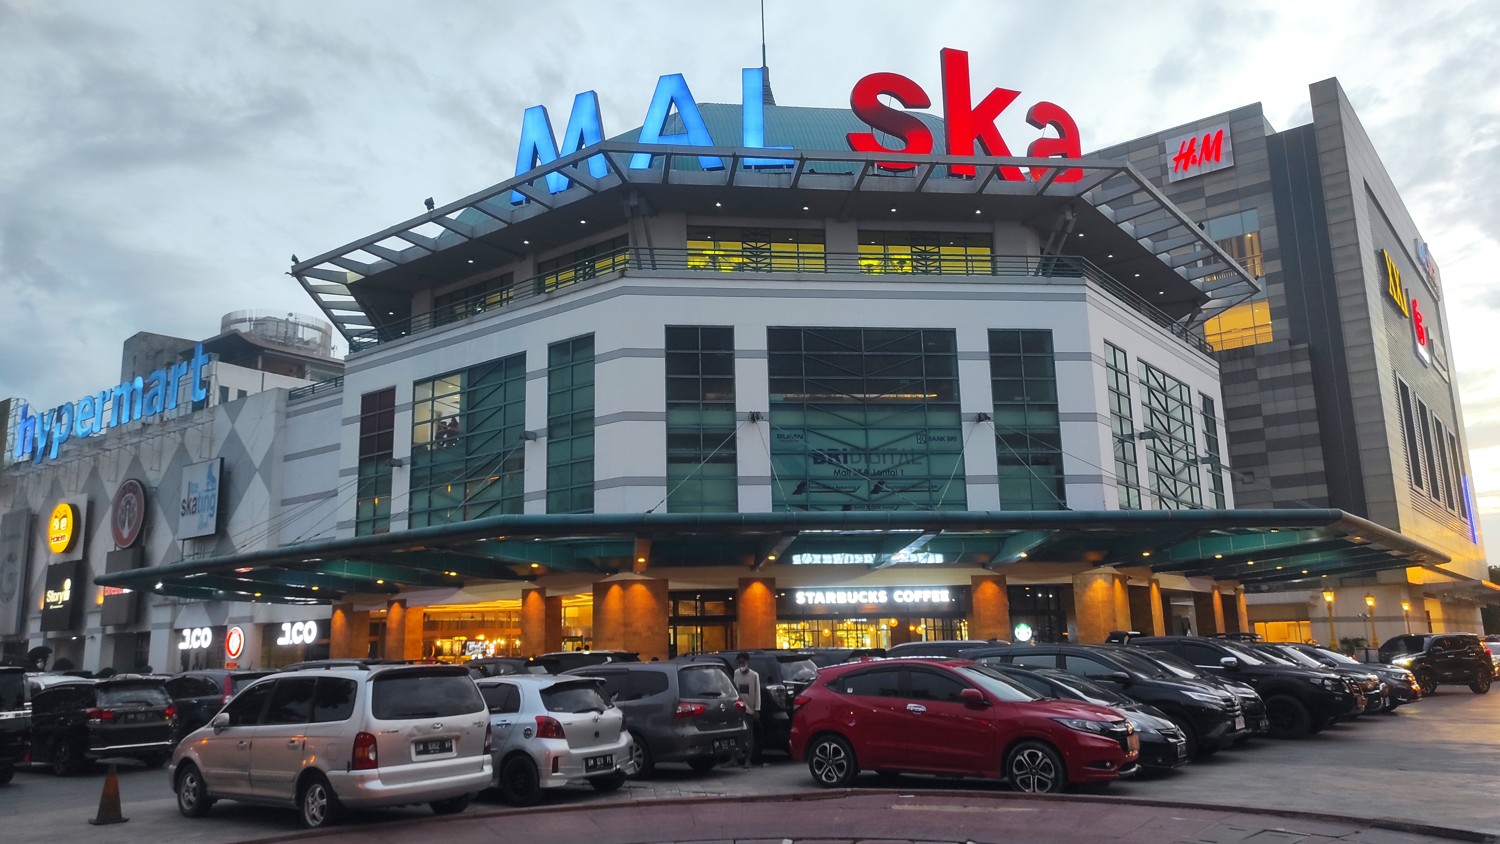 Mall SKA Pekanbaru